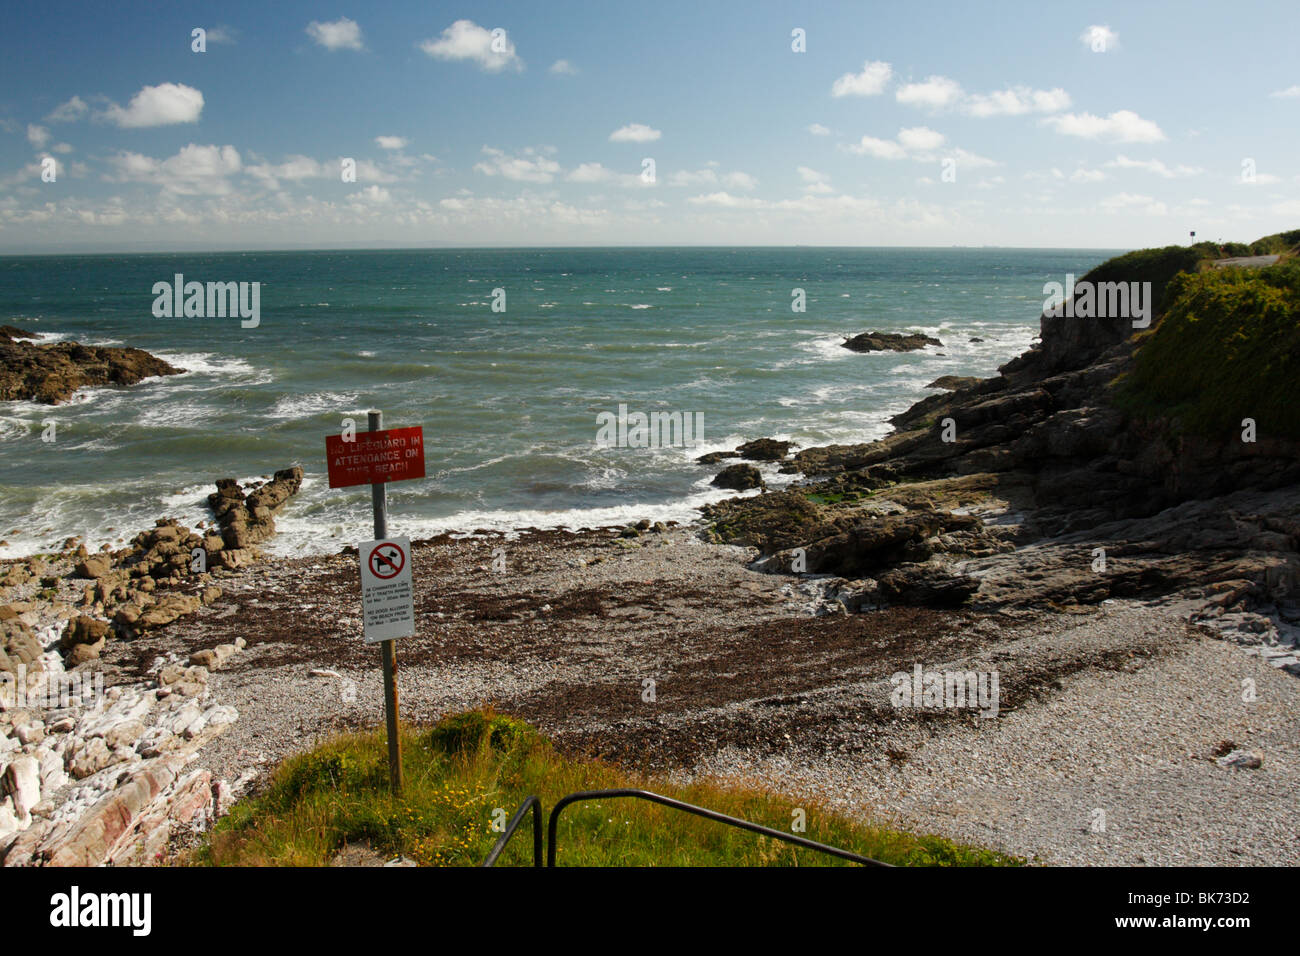 Limeslade Bay, a small beach on the Gower Peninsula near Mumbles and Swansea, West Glamorgan, south Wales, U.K. Stock Photo